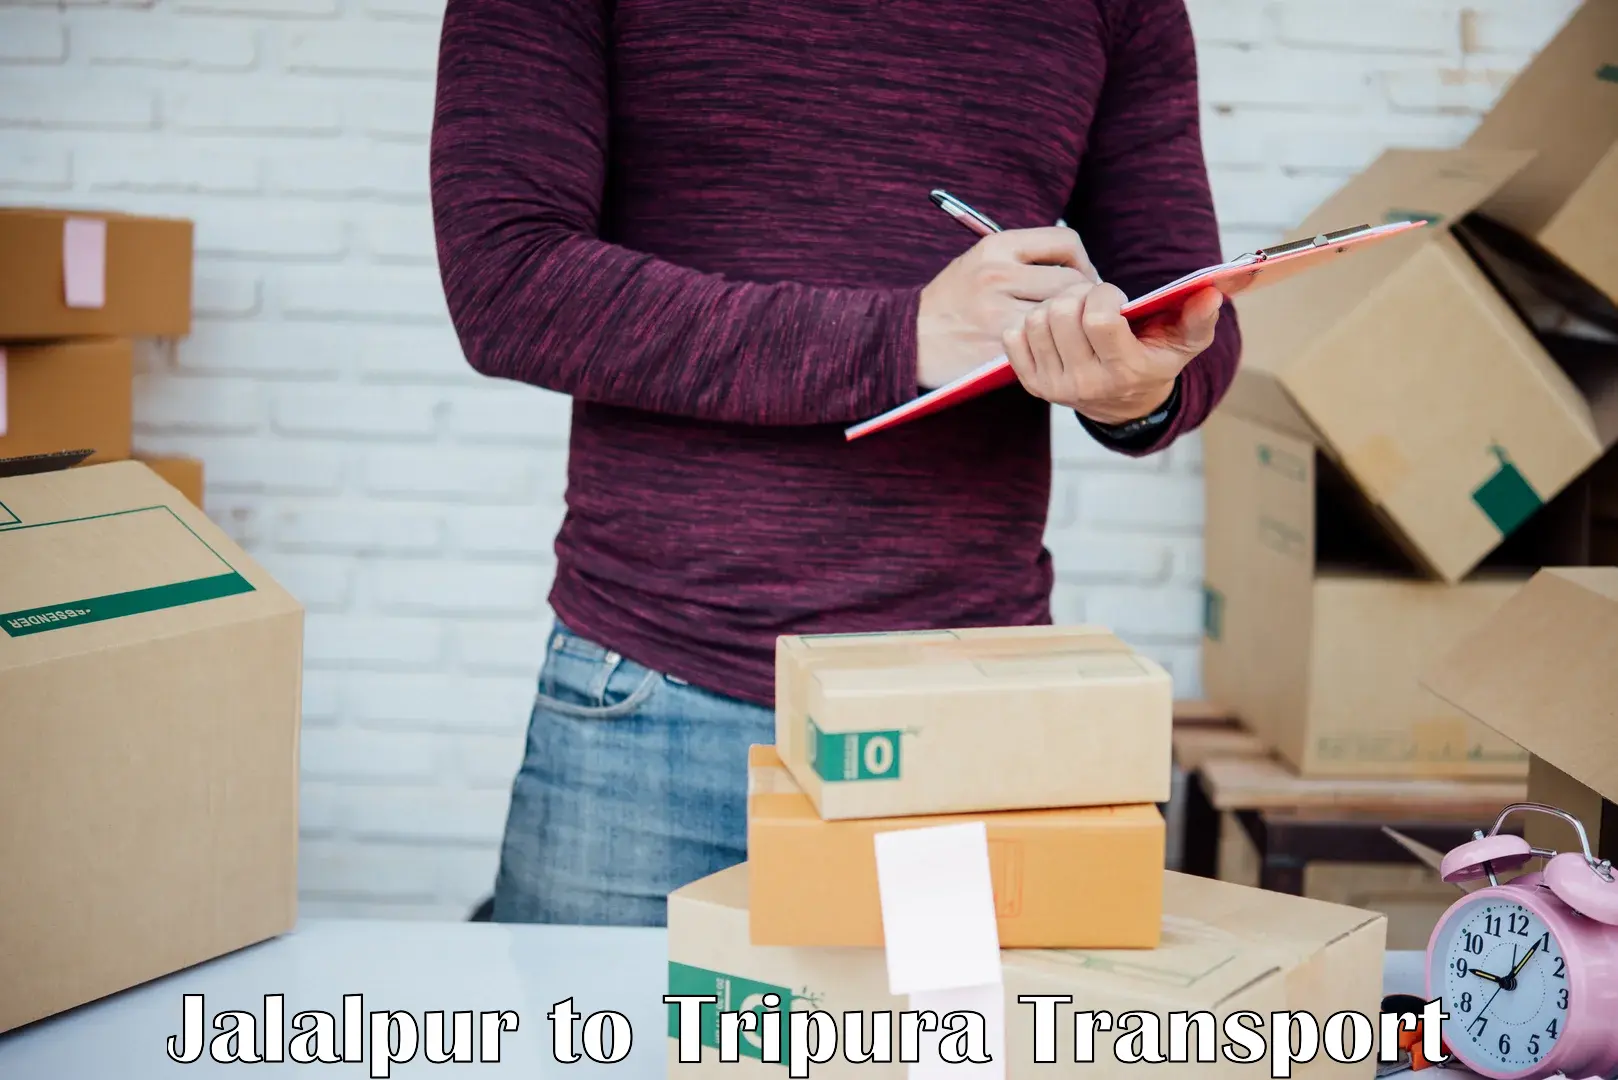 Furniture transport service Jalalpur to West Tripura